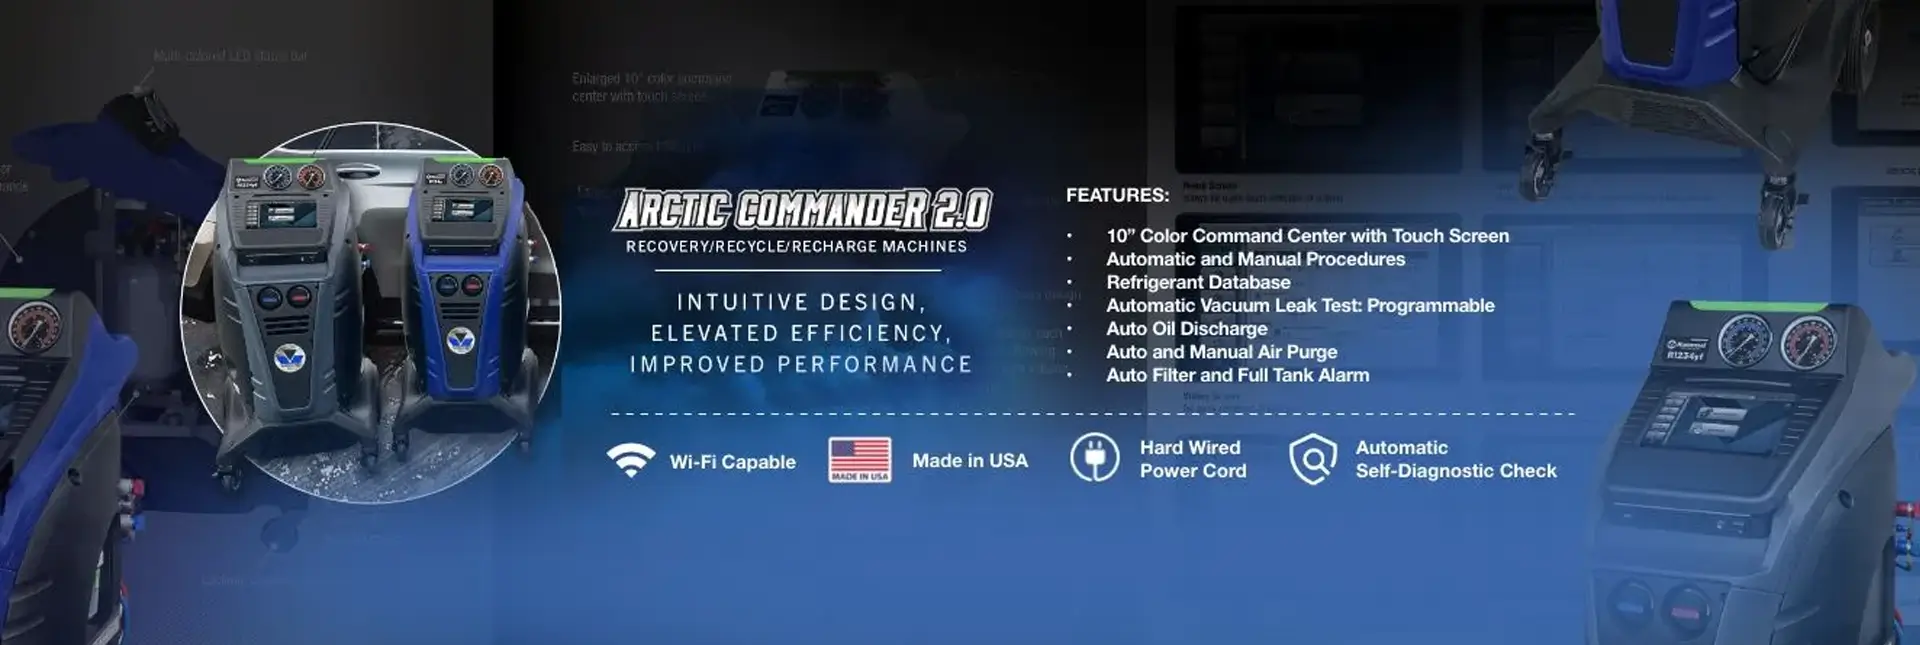 Mastercool’s enhanced Arctic Commander 2.0 line of R/R/R machines